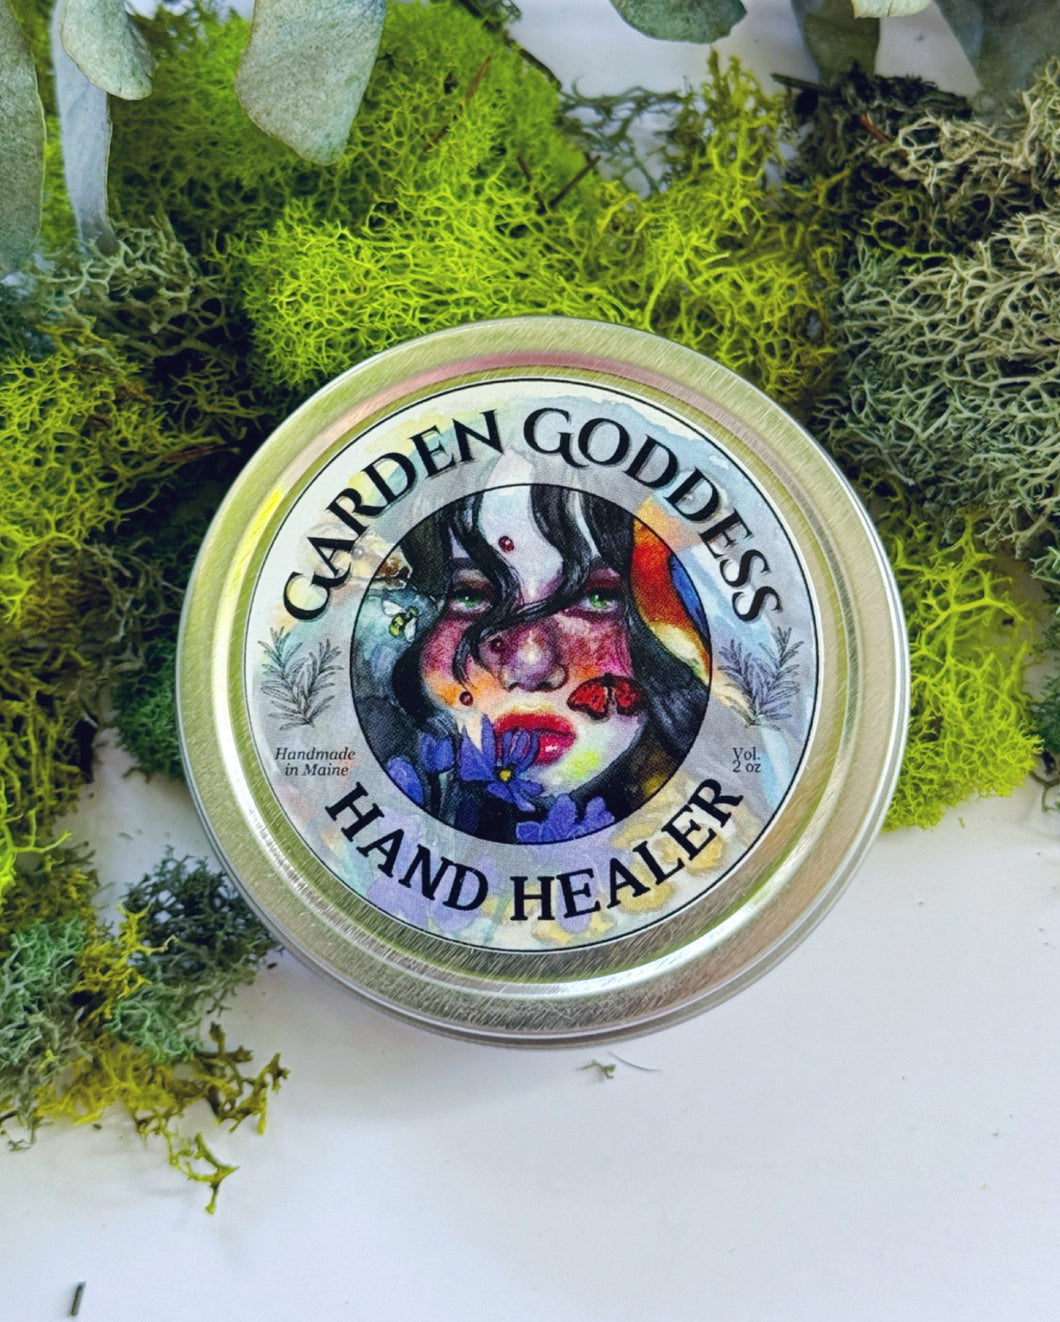 Garden Goddess Hand Healer